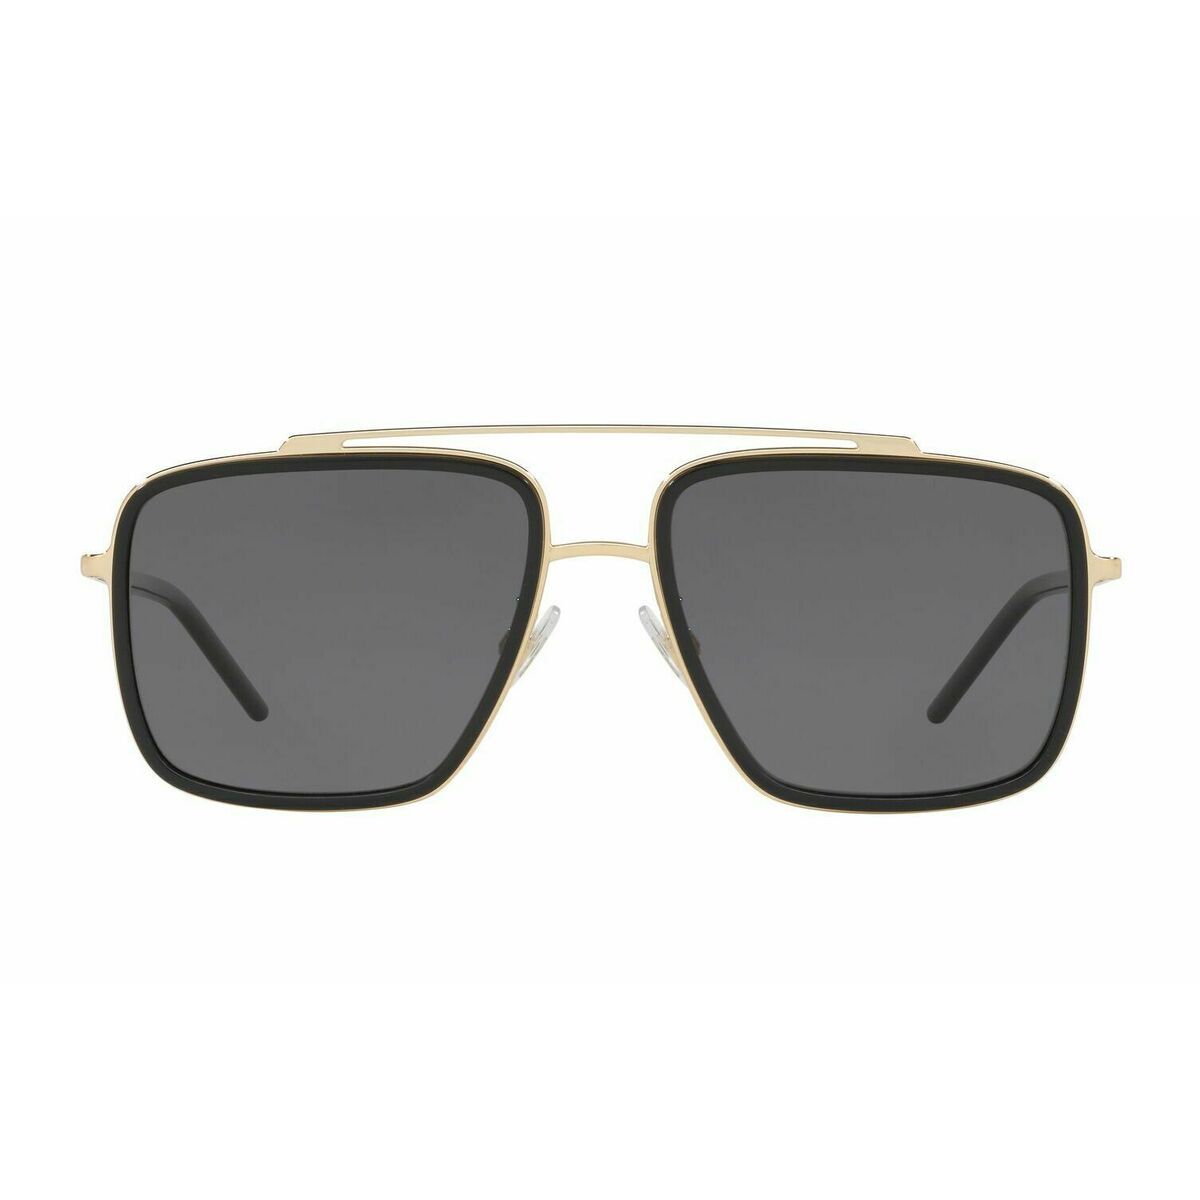 DG2220 Square Sunglasses 02 81 - size 57